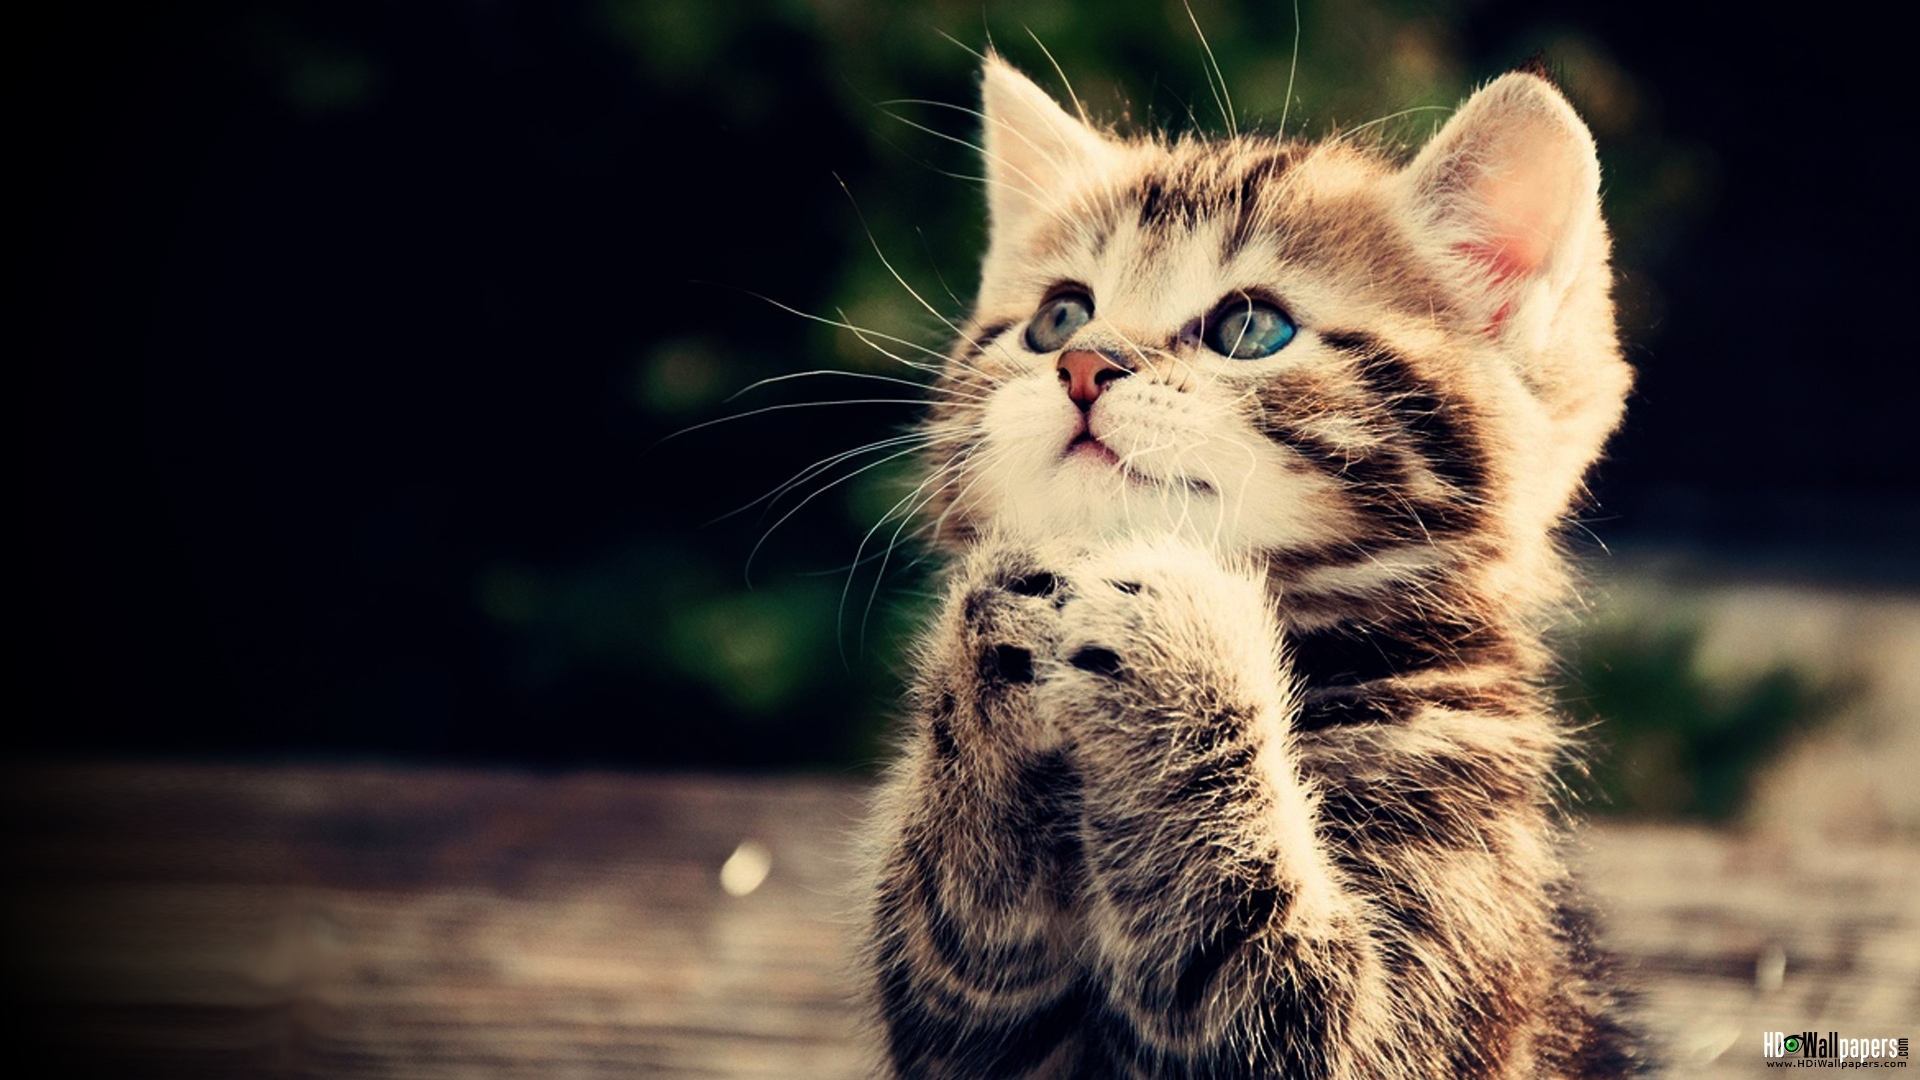 Persian Cat Images | Download Free Desktop Wallpaper Images & Pictures